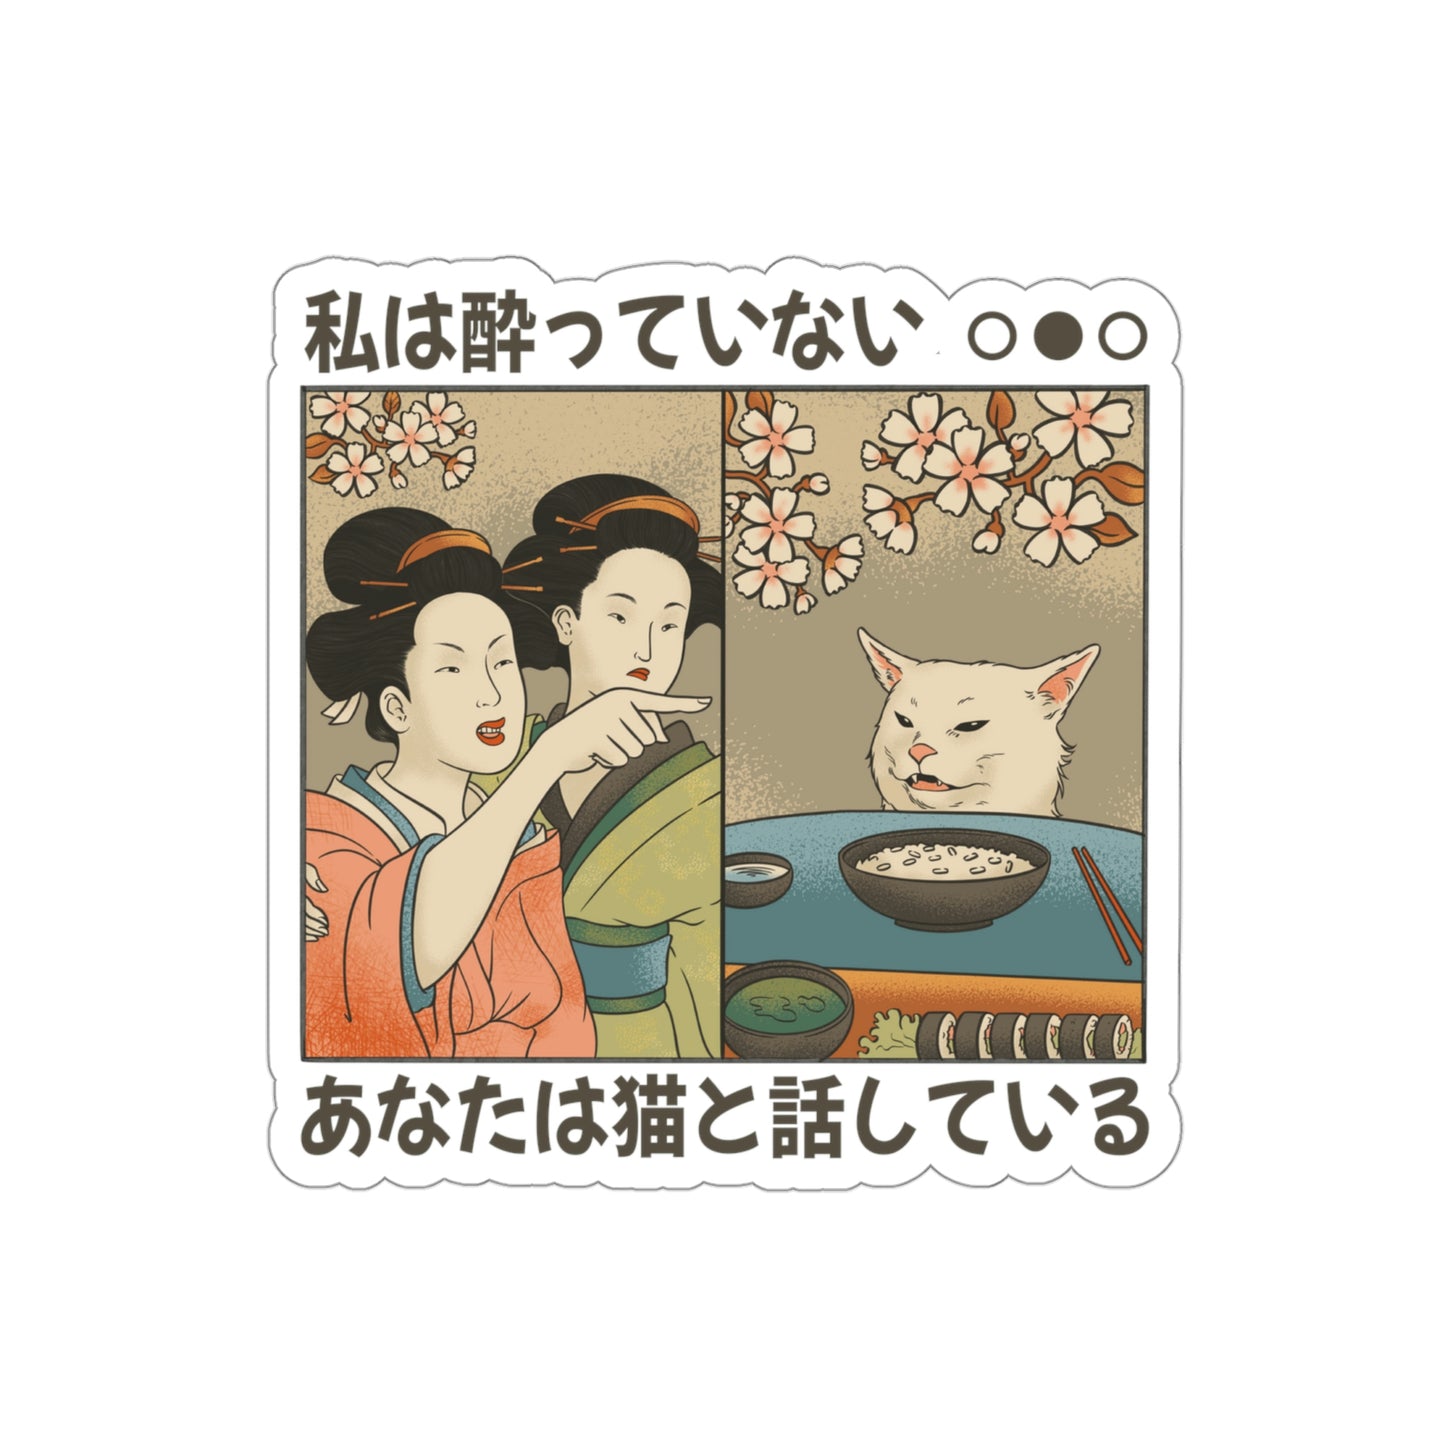 Japanese Aesthetic, Meme, Woman Shouting On Cat Sticker